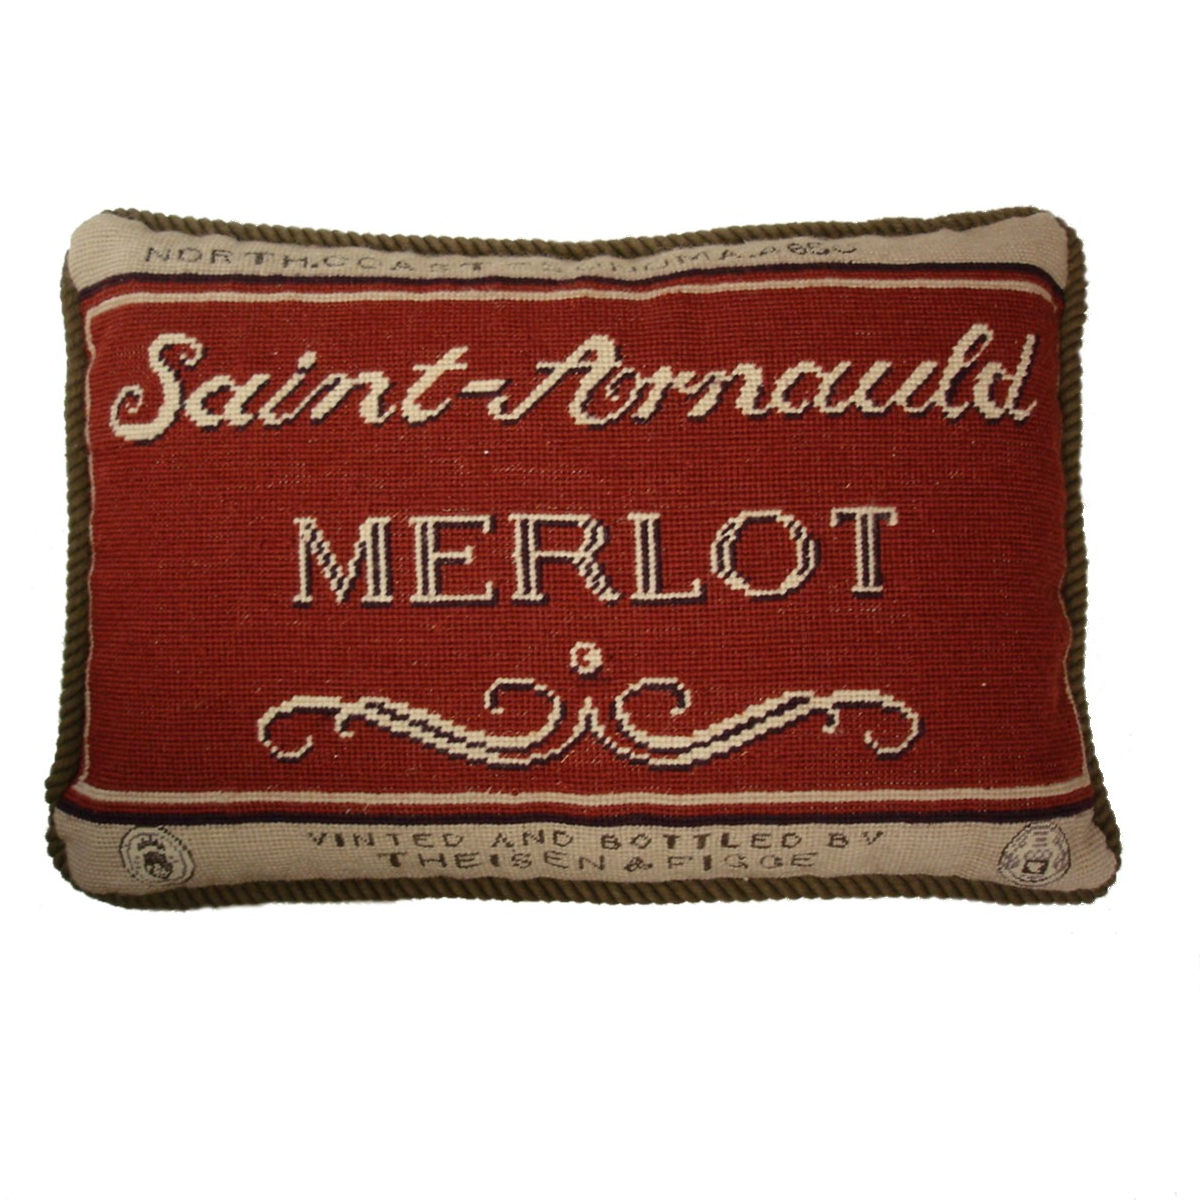 "Saint-Arnauld" Pillow